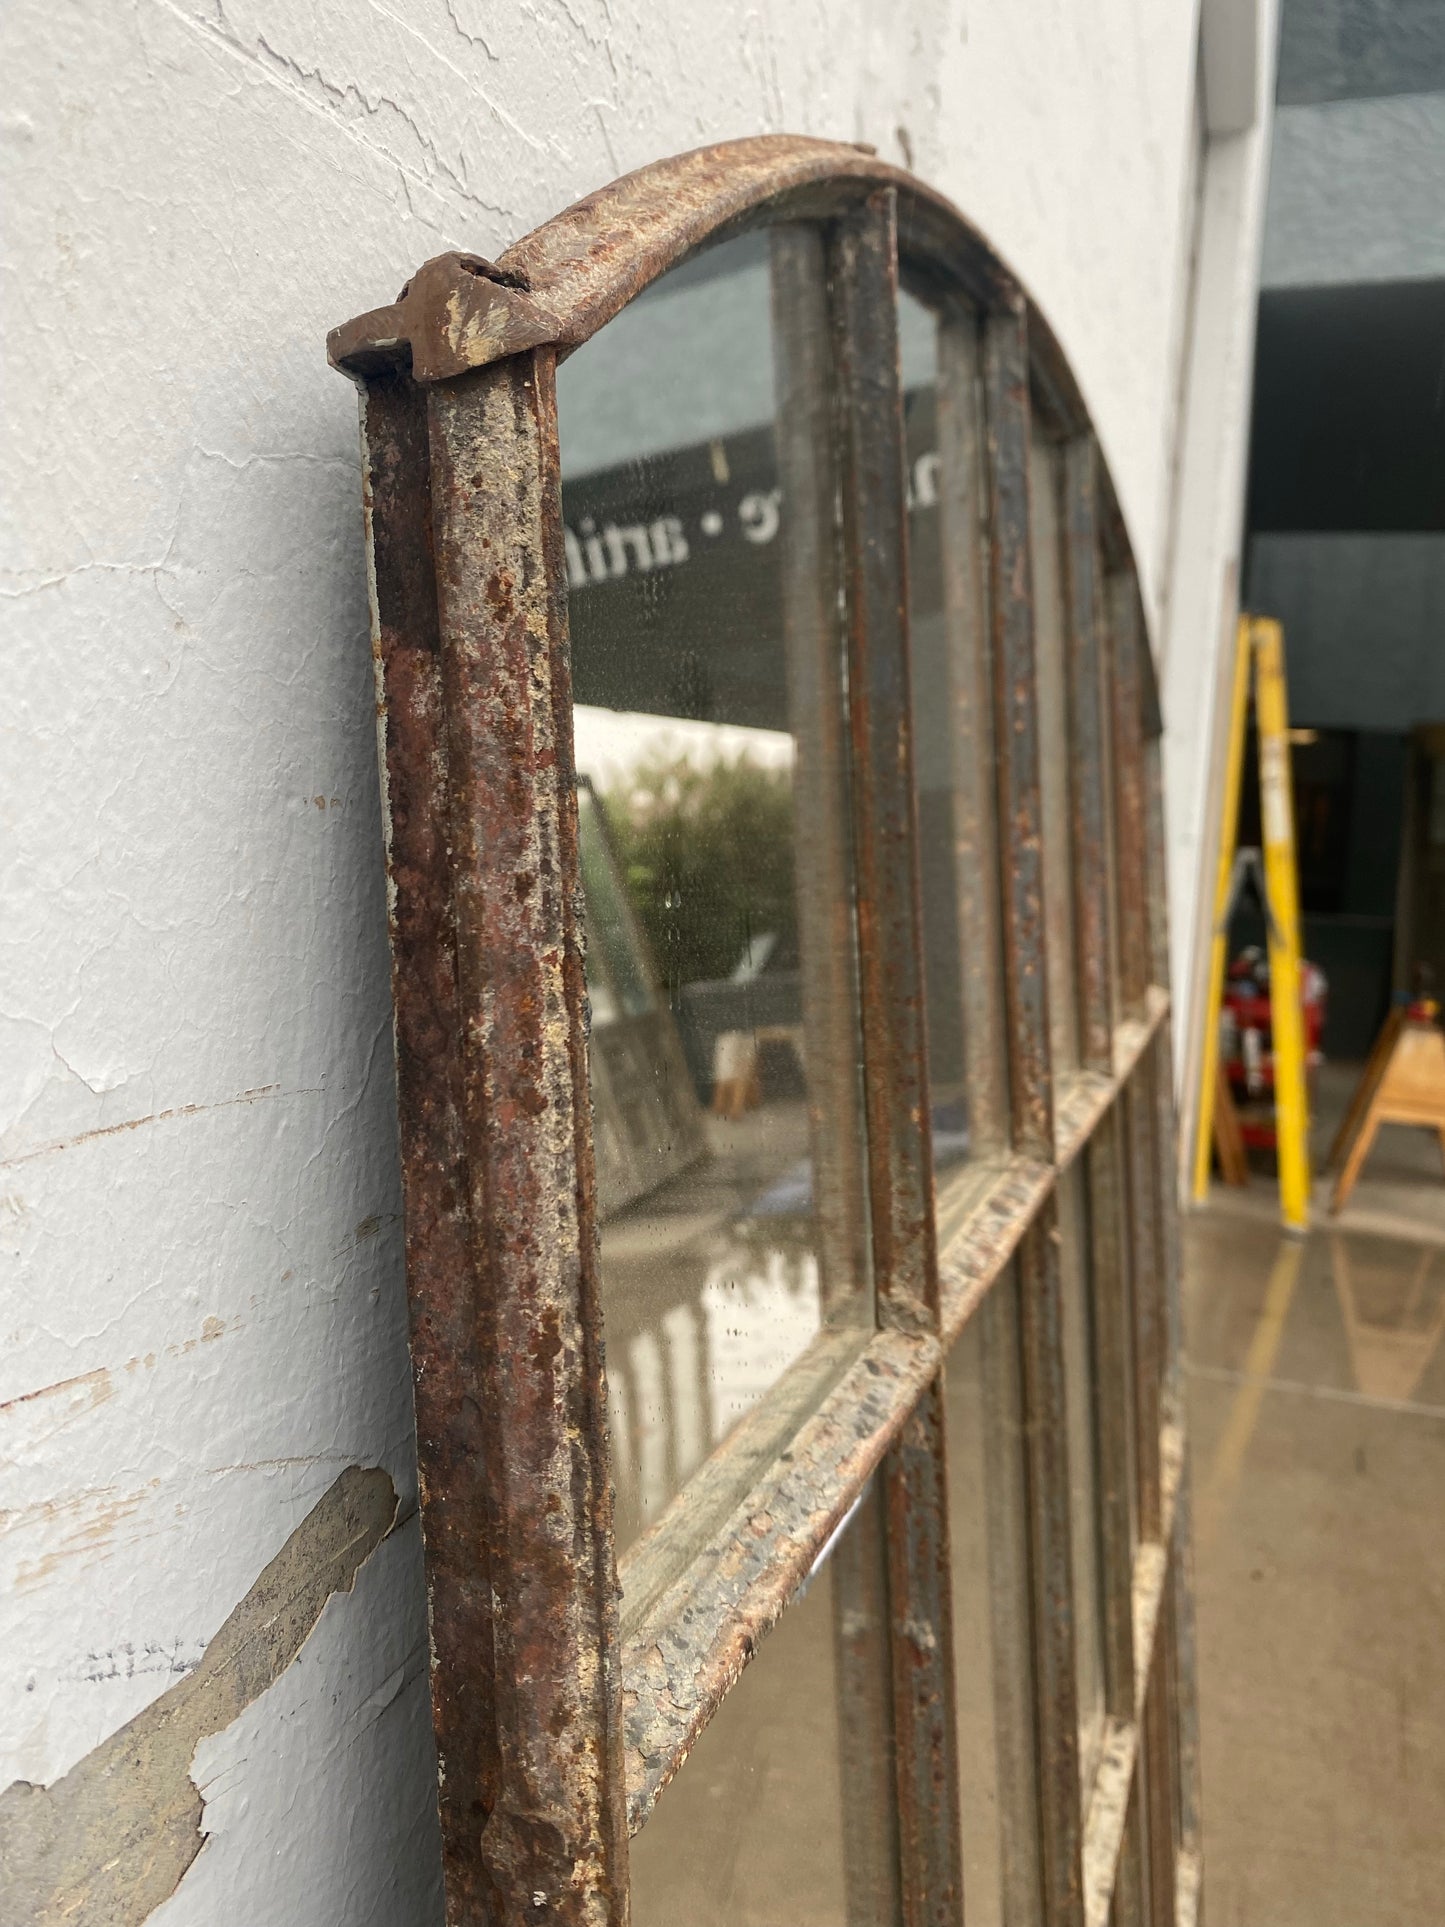 25 Pane Repurposed Arched Metal Mirror